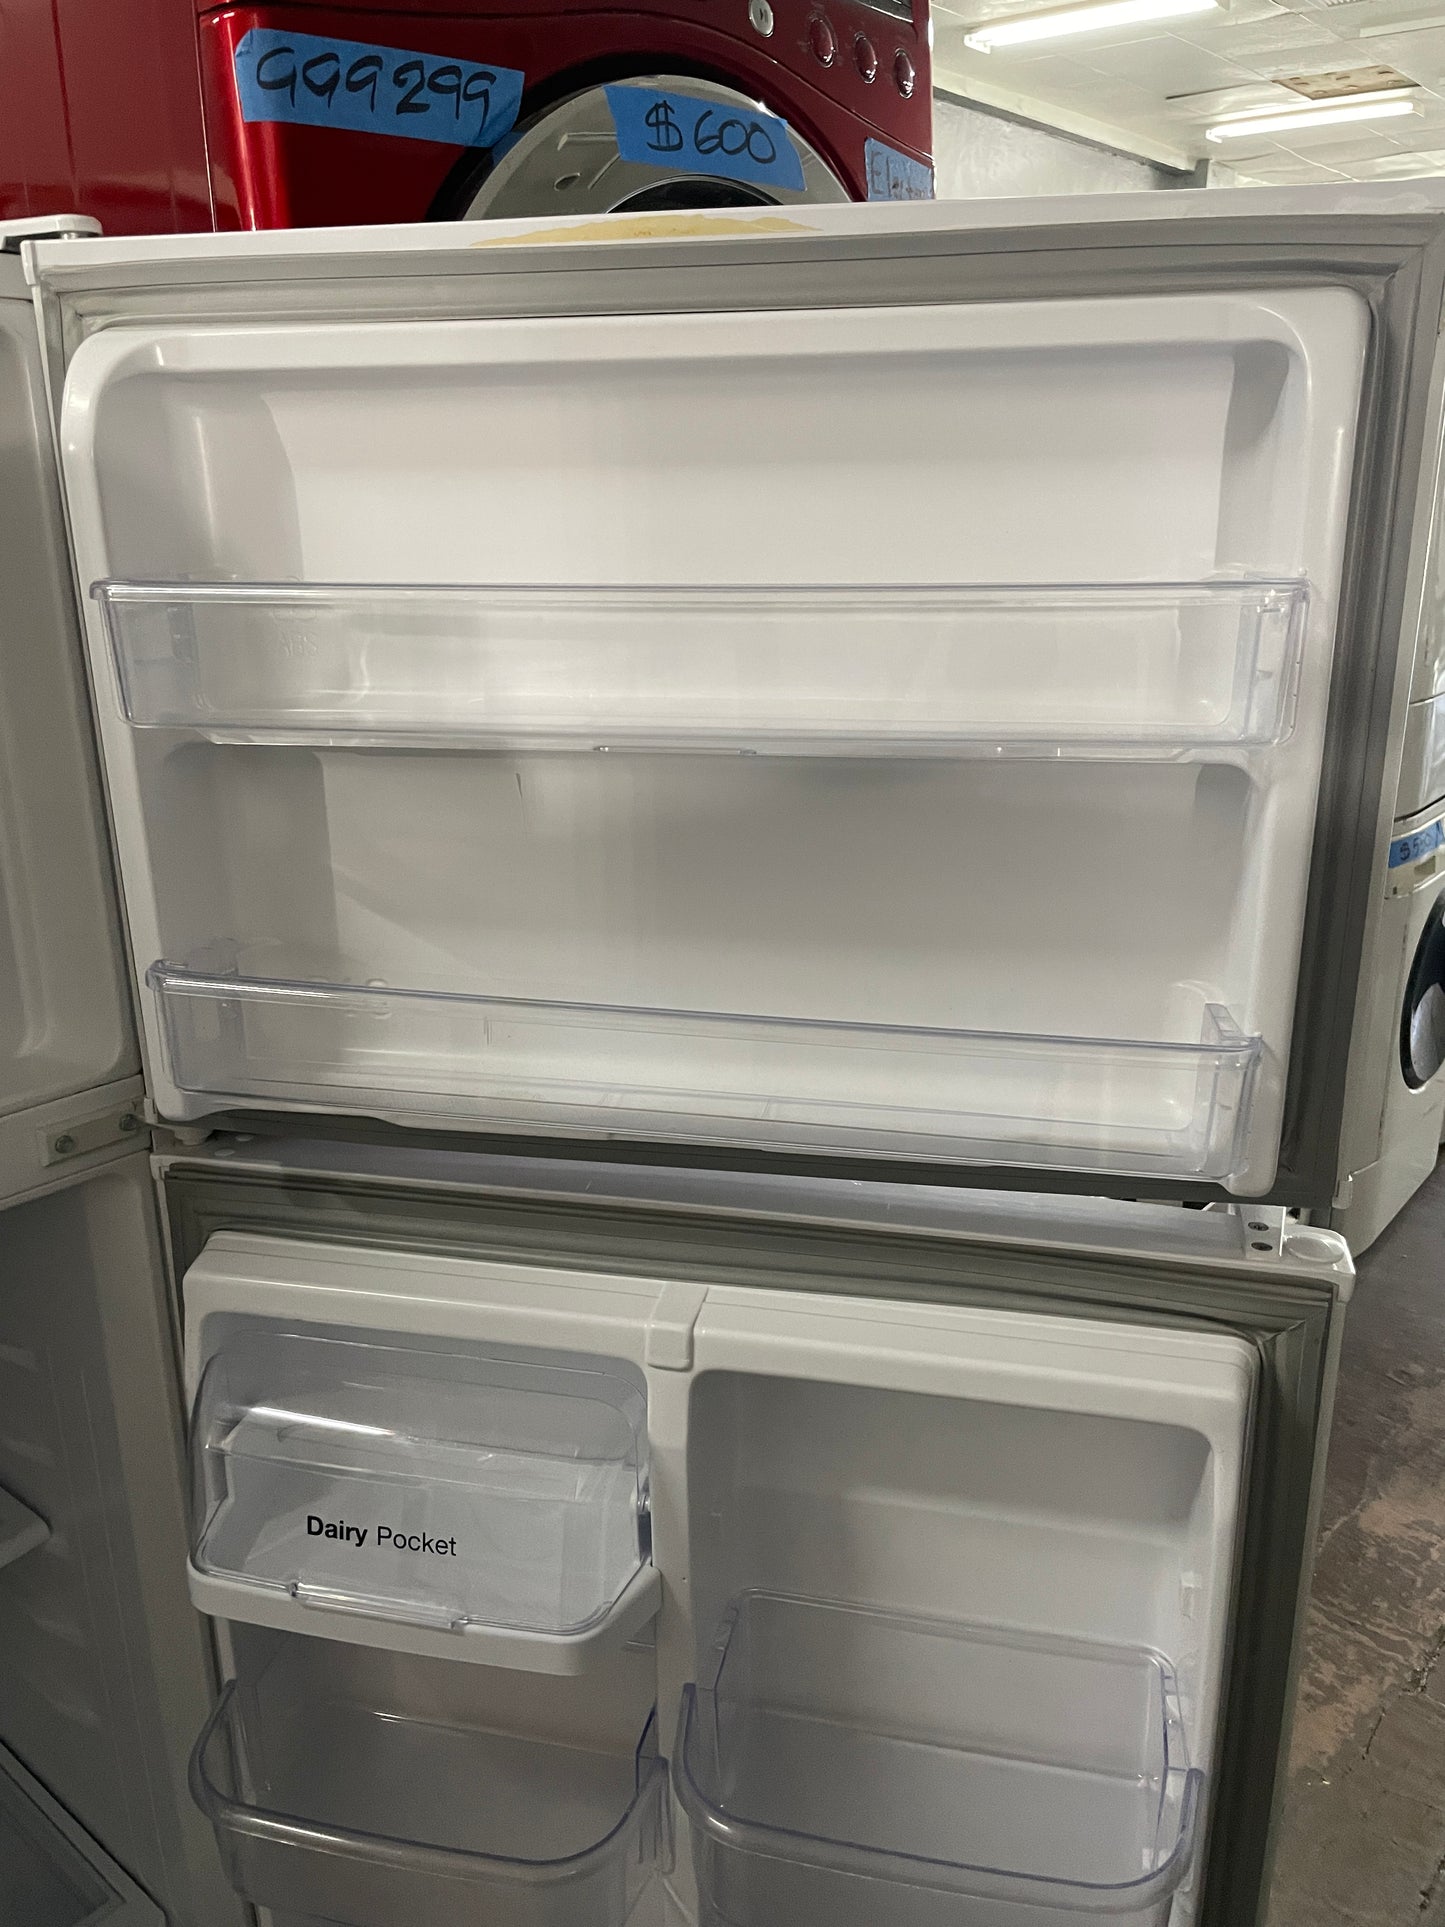 Winia 30 Top Freezer Refrigerator In White, WTE18GCWCD, 999754